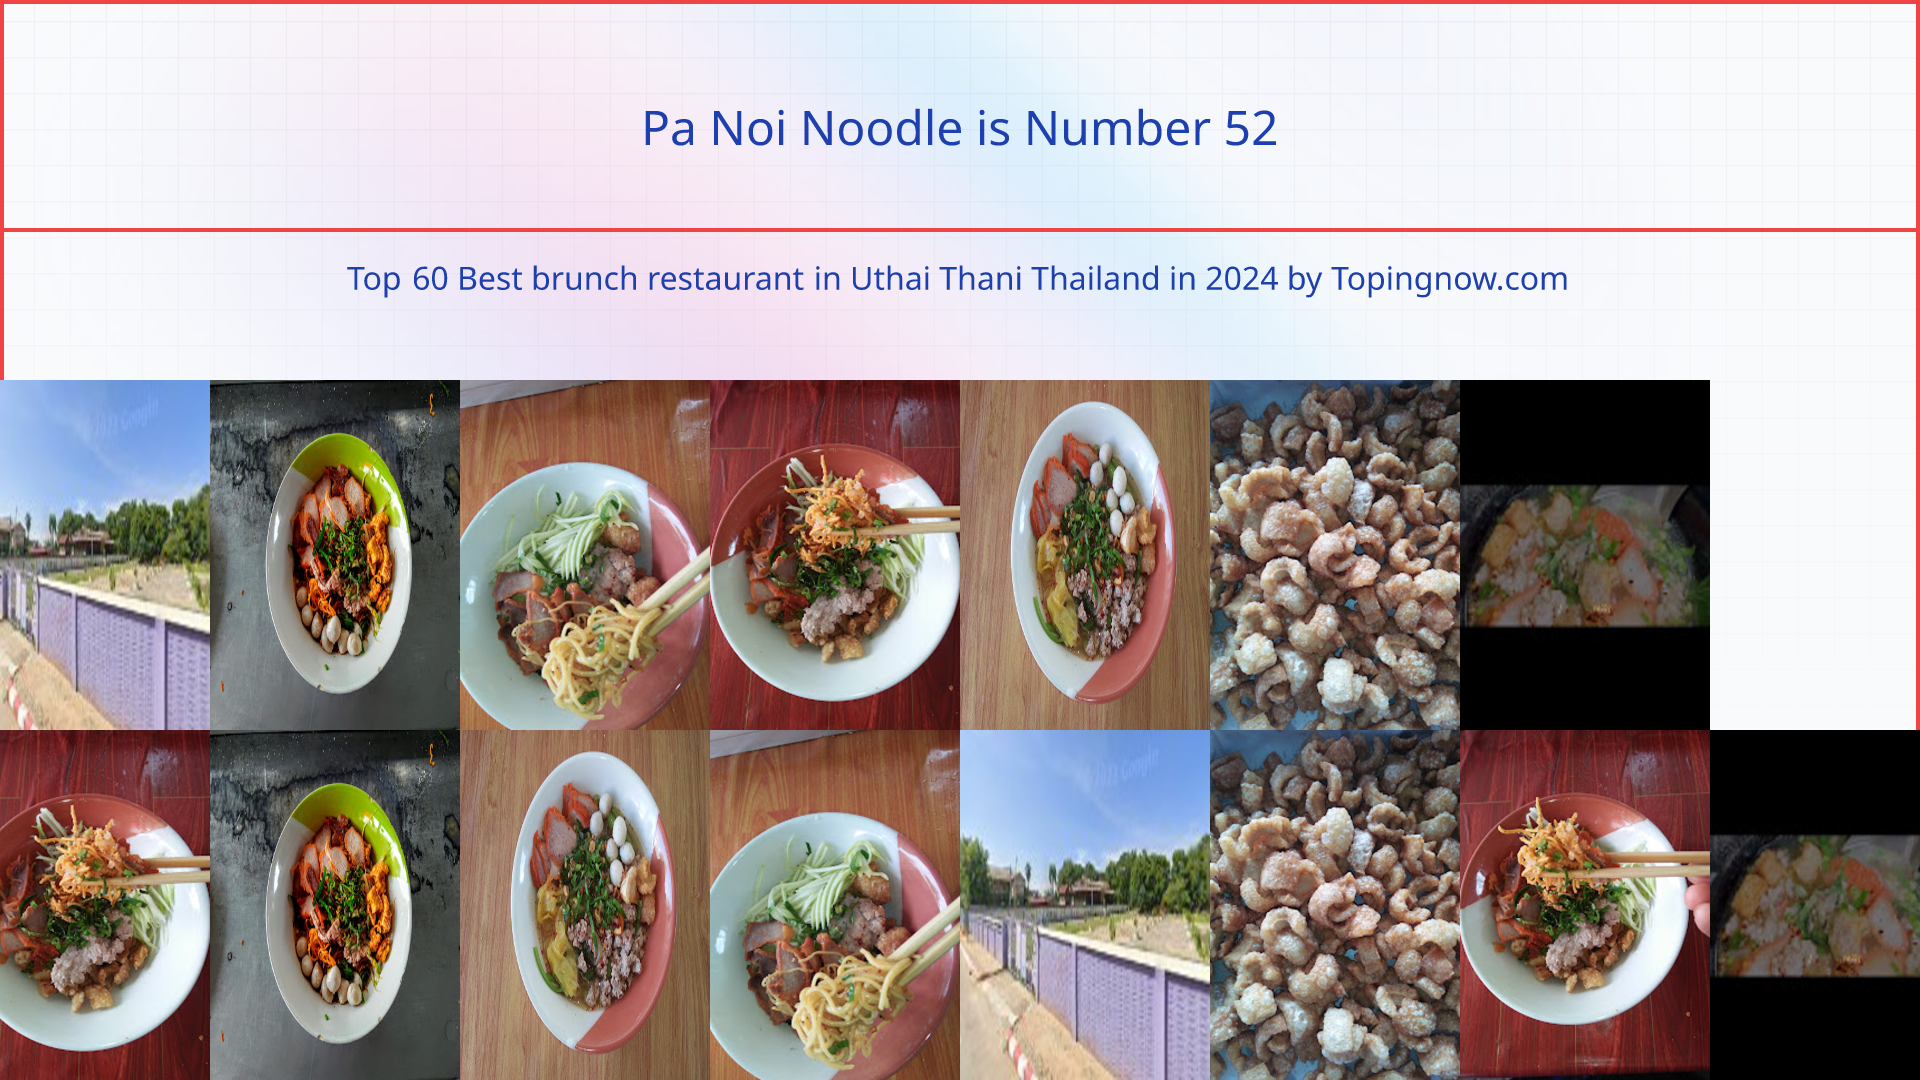 Pa Noi Noodle: Top 60 Best brunch restaurant in Uthai Thani Thailand in 2024